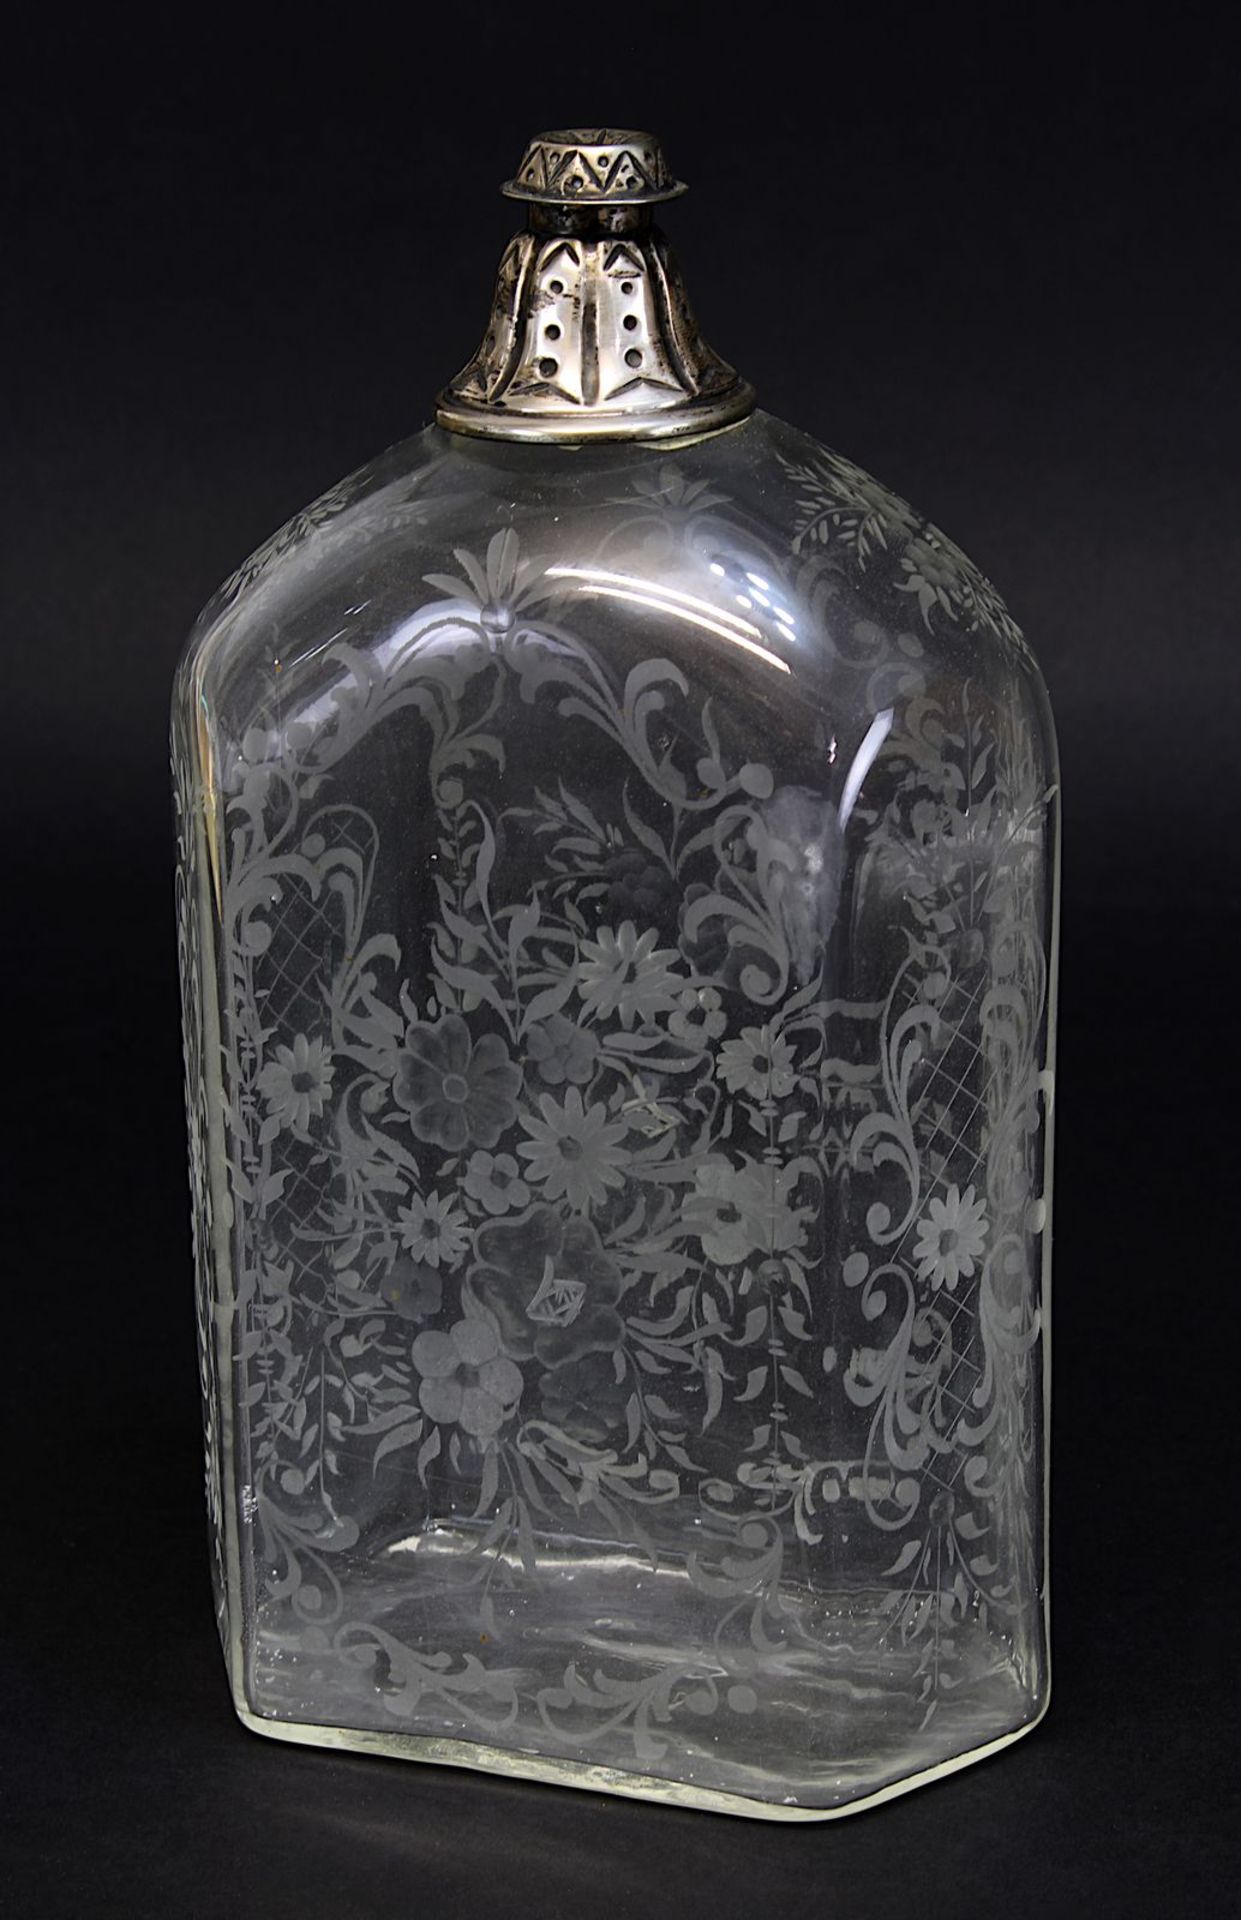 Sechskantflasche mit Silberverschluß, Böhmen um 1880, nach barockem Vorbild, flach gedrückter